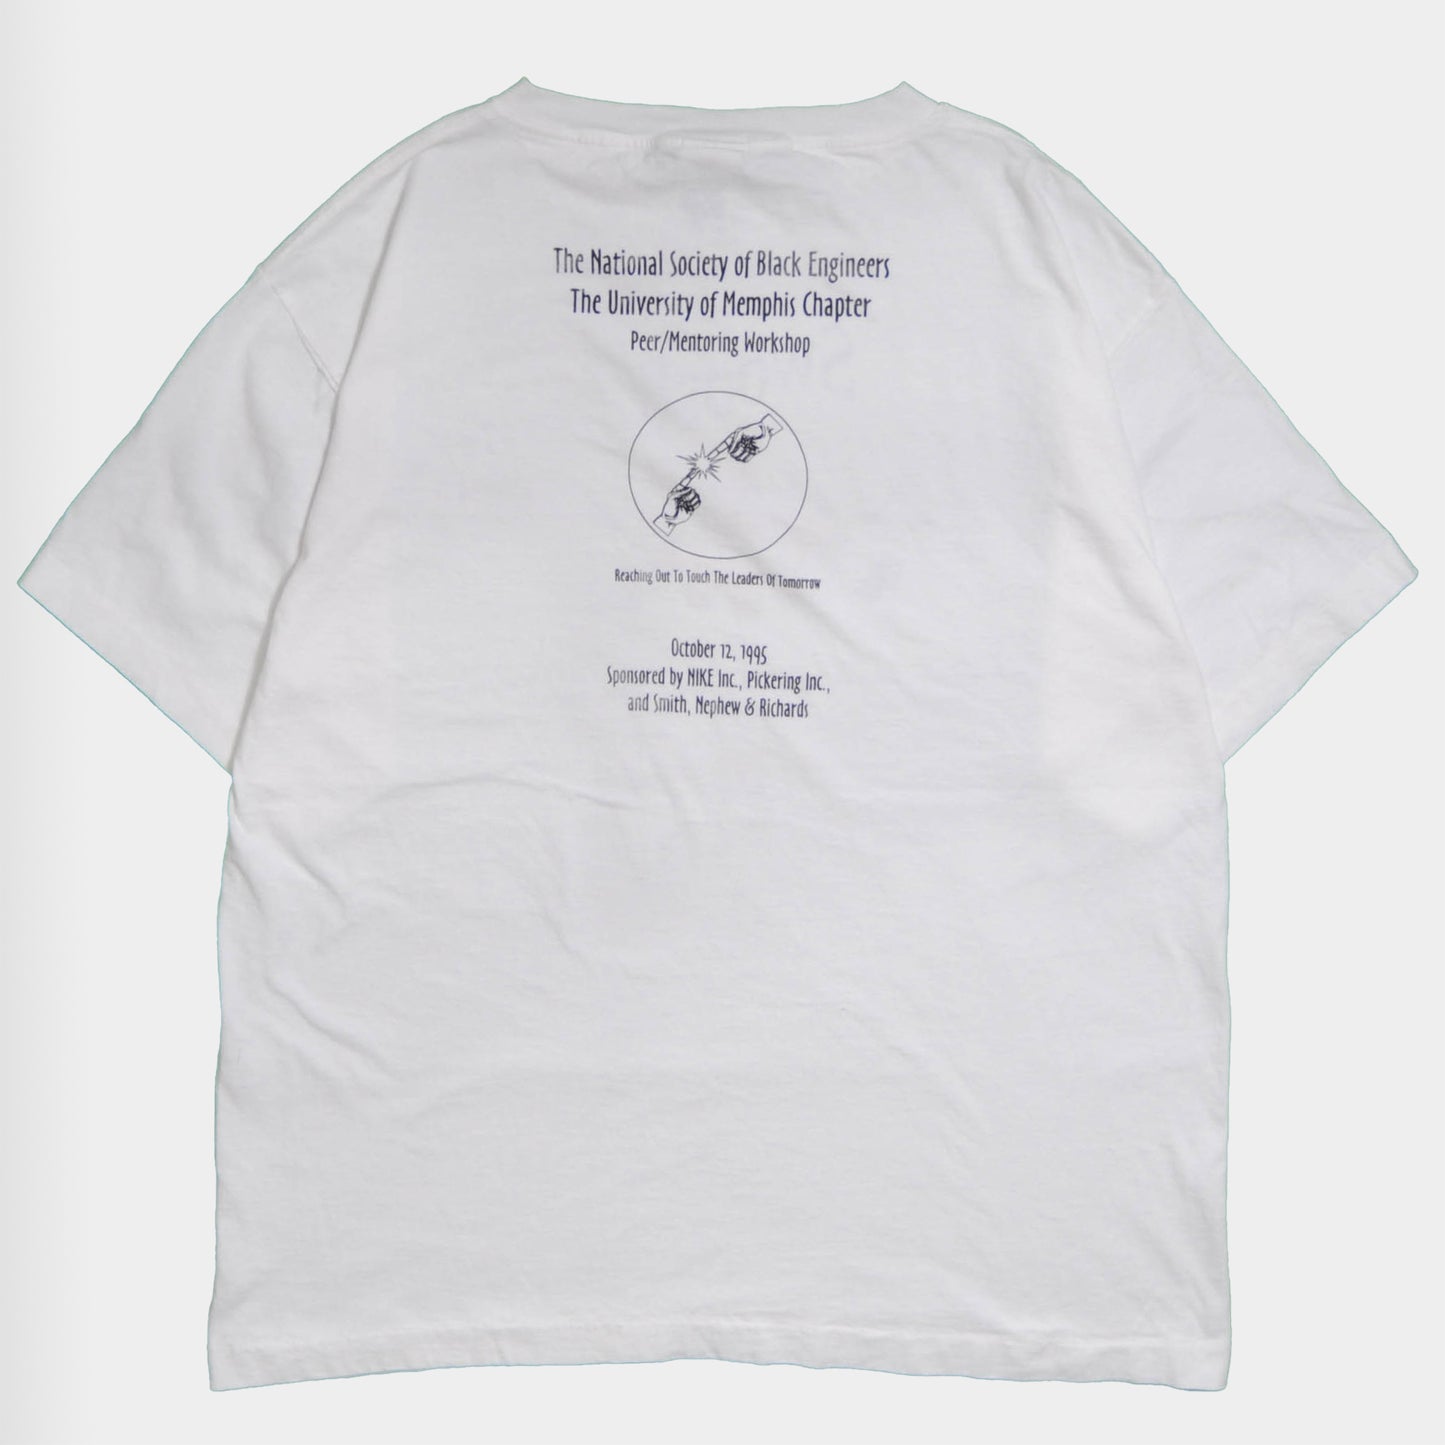 90's NIKE"SWOOSH" Tシャツ (XL)/A3886T-O